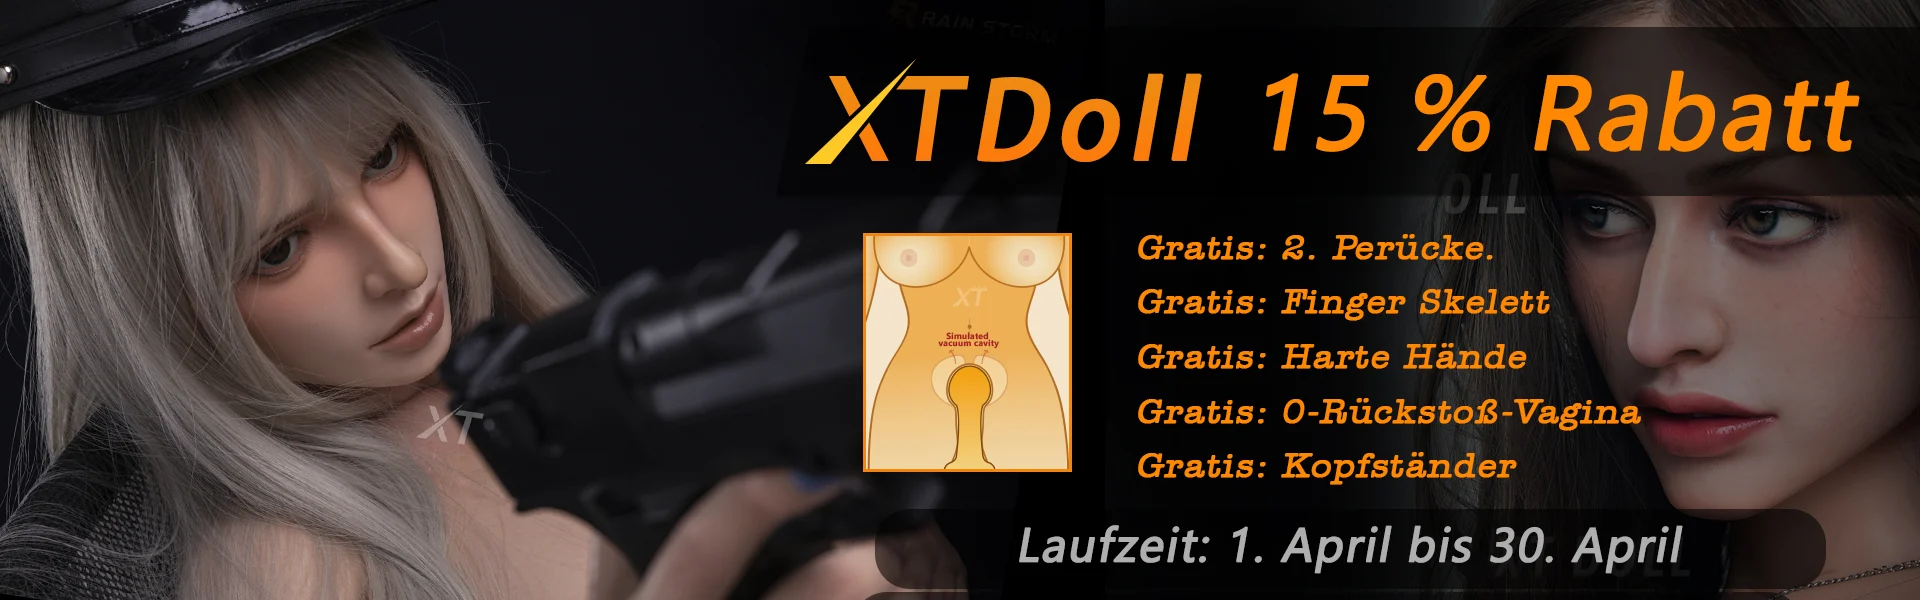 XT Doll Sale